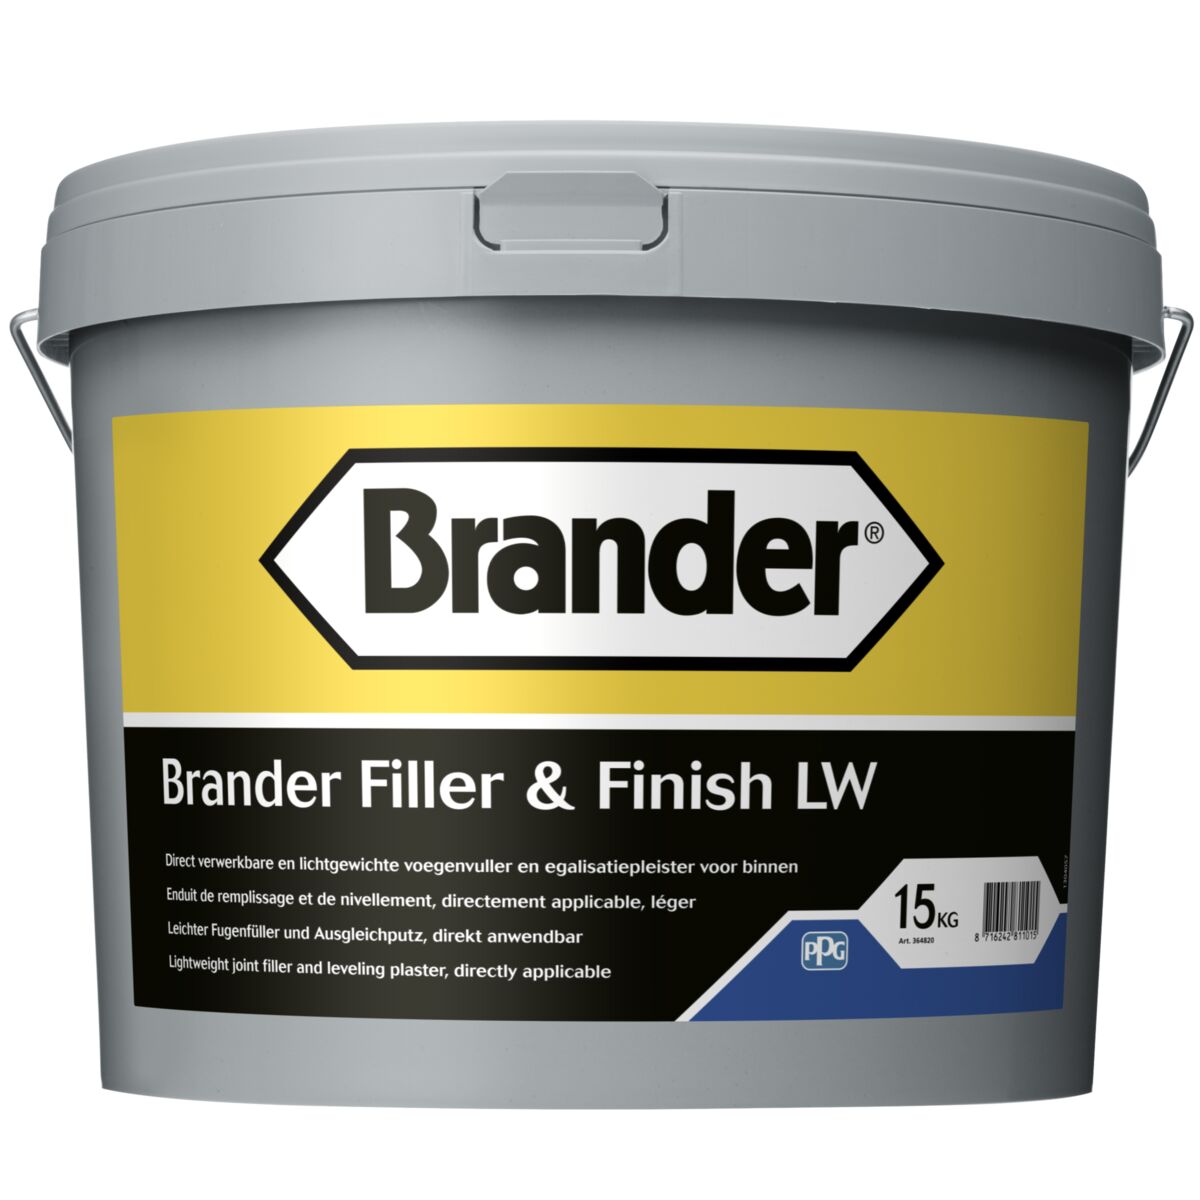 Brander Filler & Finish LW